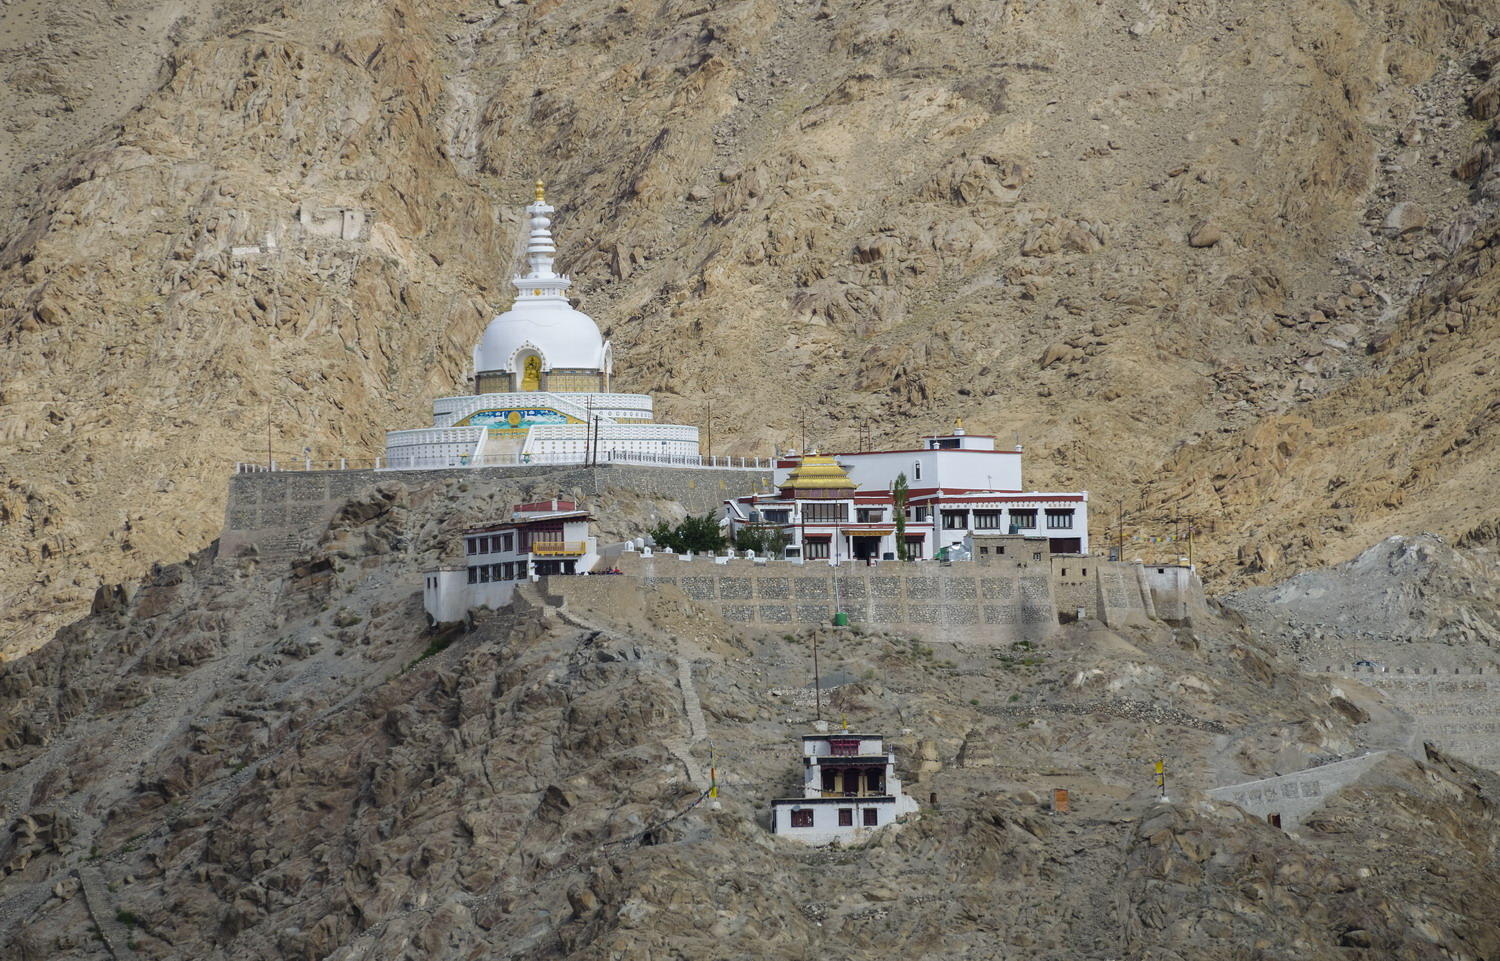 DSC_5156_1A1 - Shanti Stupa (Leh)